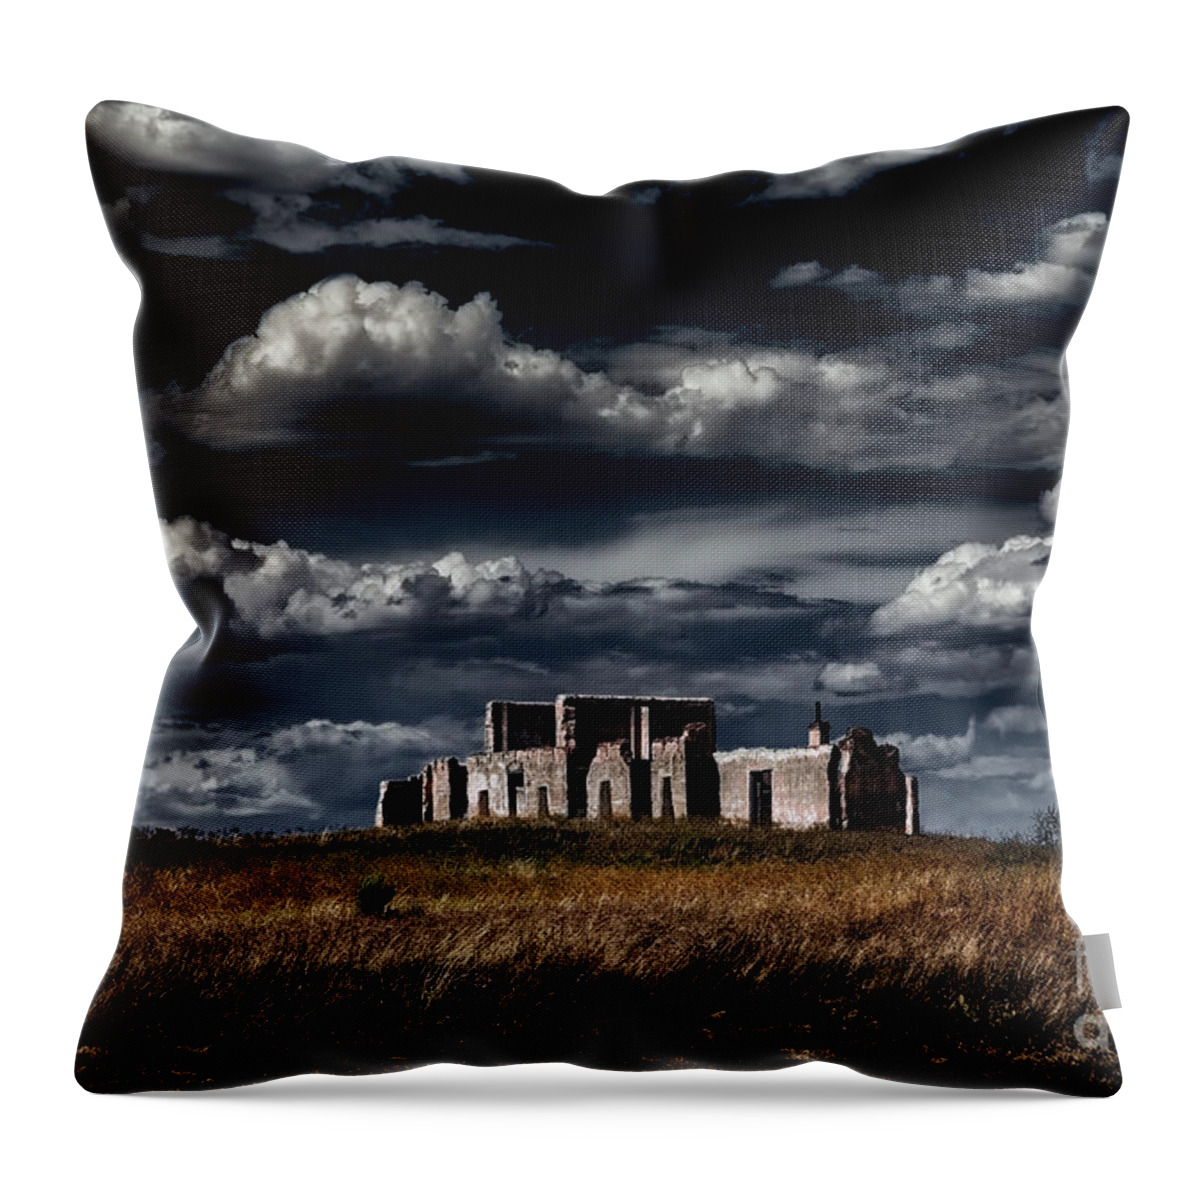 Jon Burch Throw Pillow featuring the photograph Fort Laramie Hospital Ruins by Jon Burch Photography